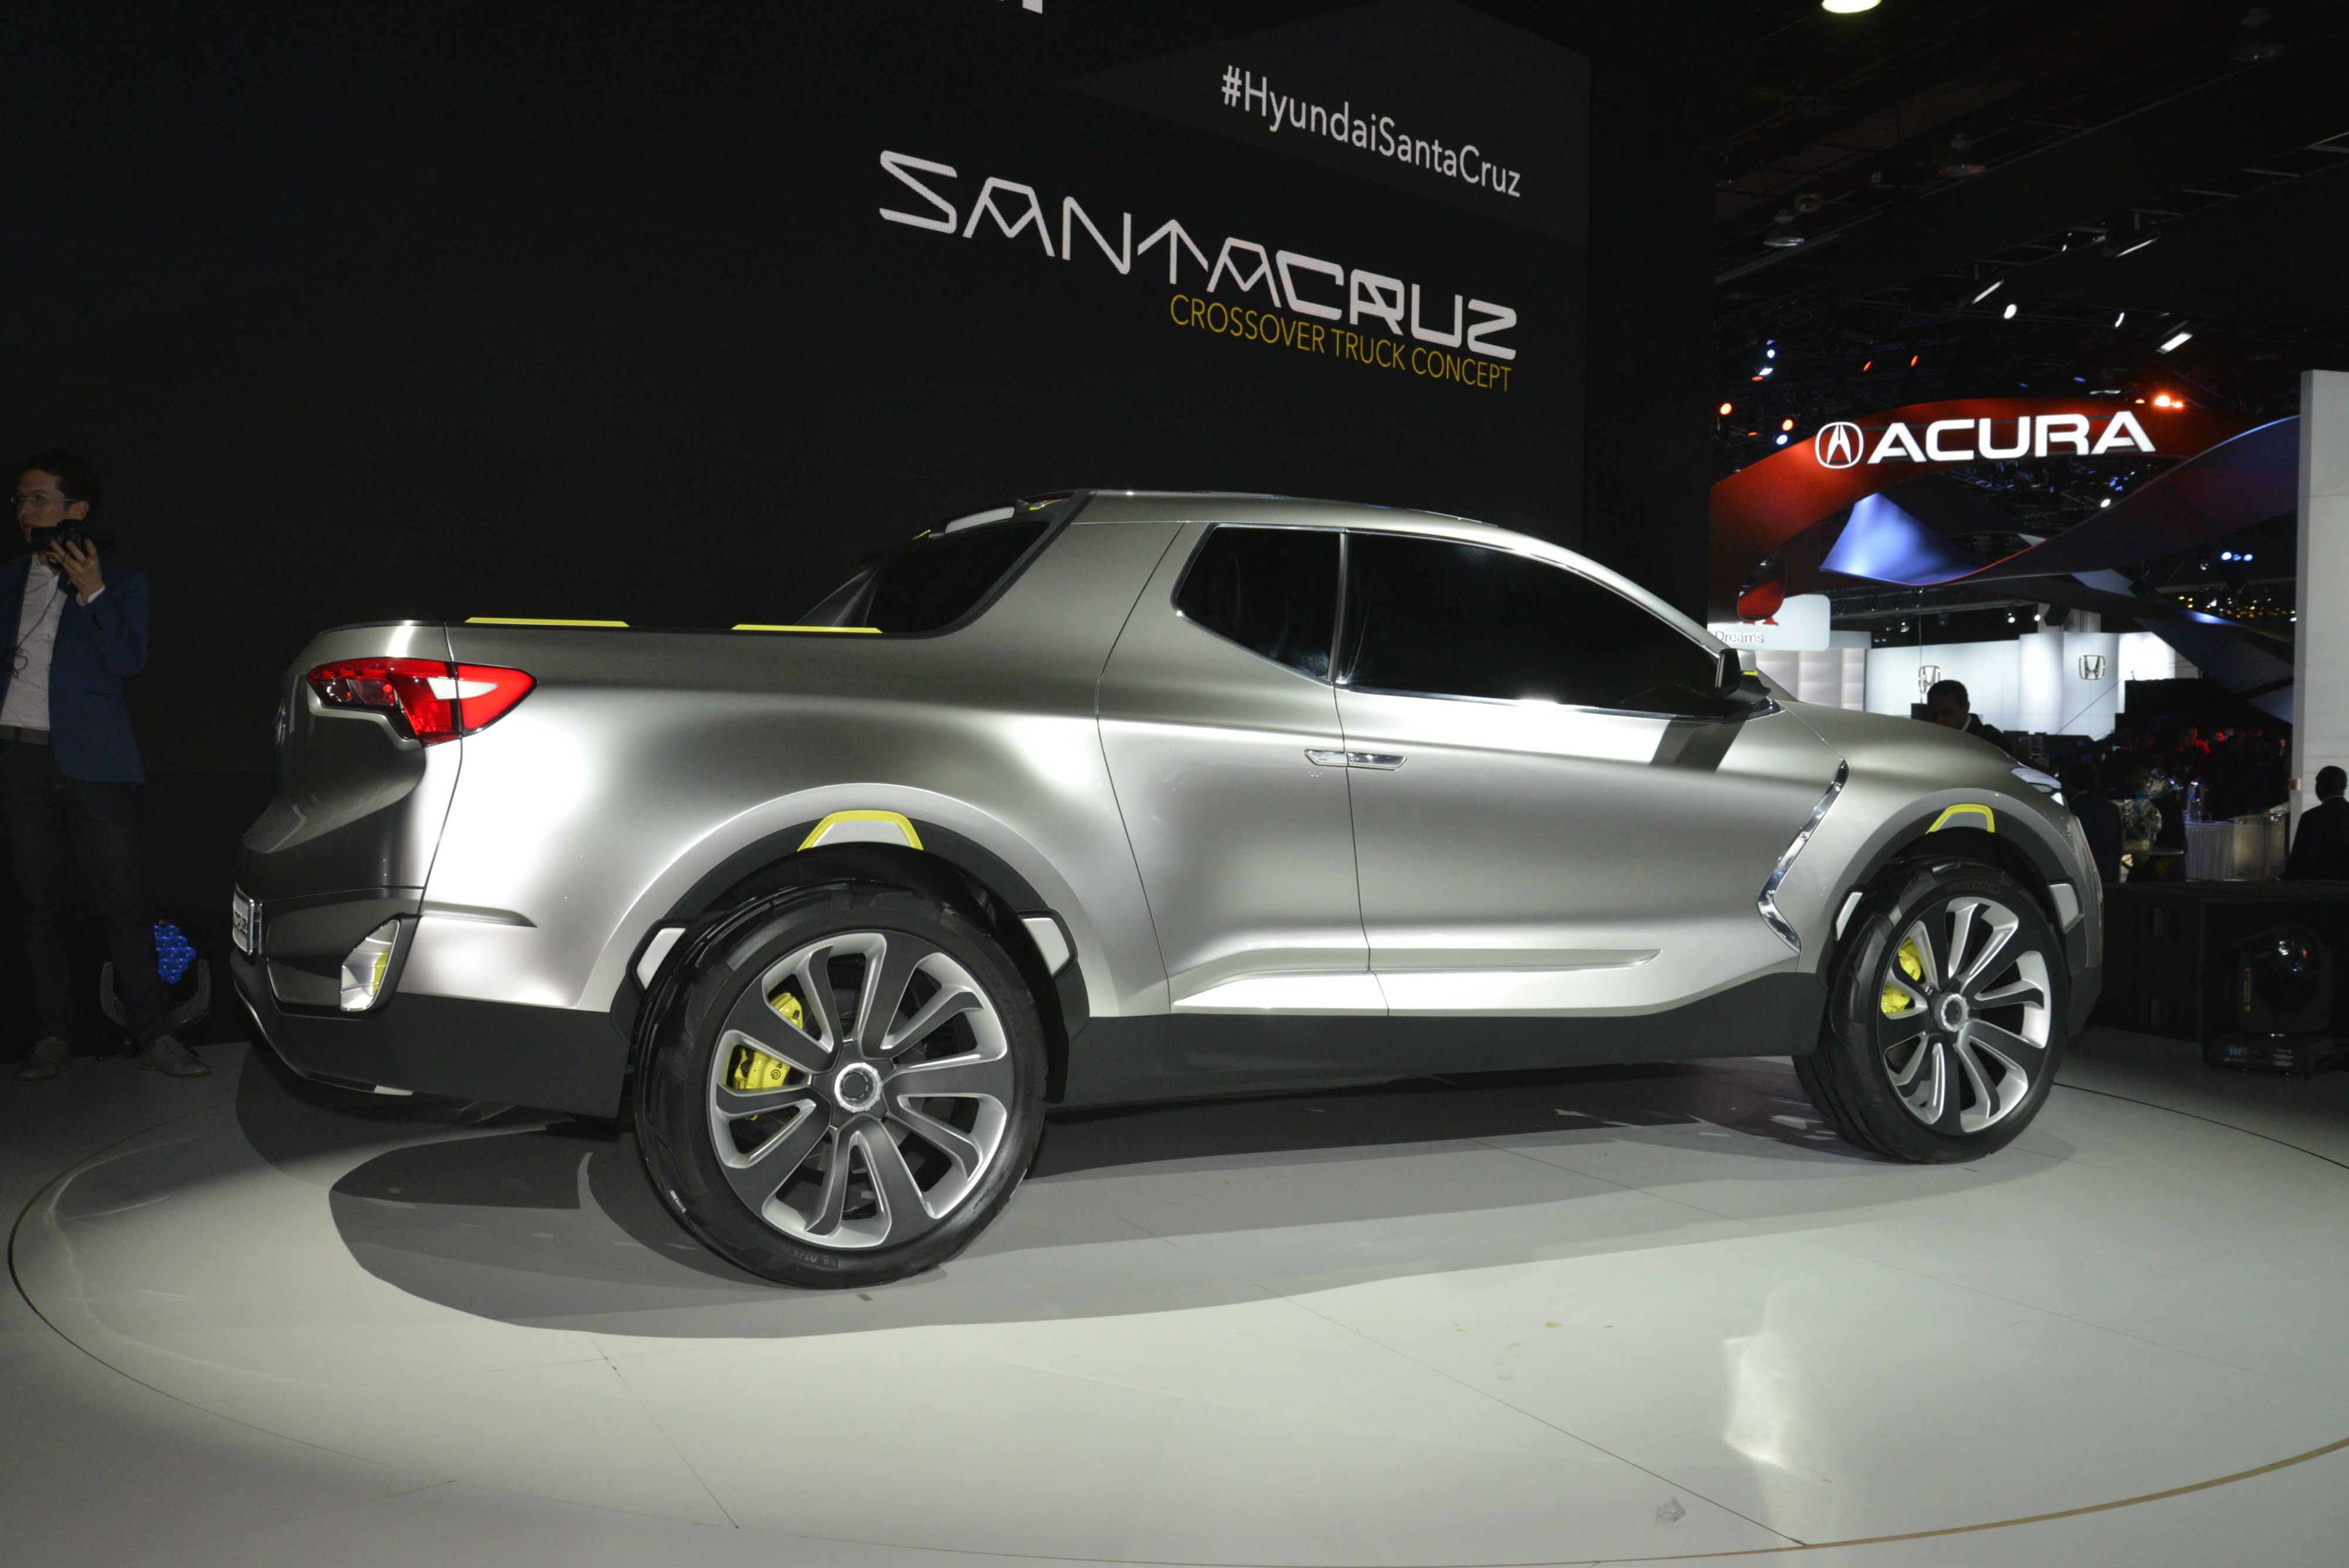 Hyundai Santa Cruz pick-up rear view